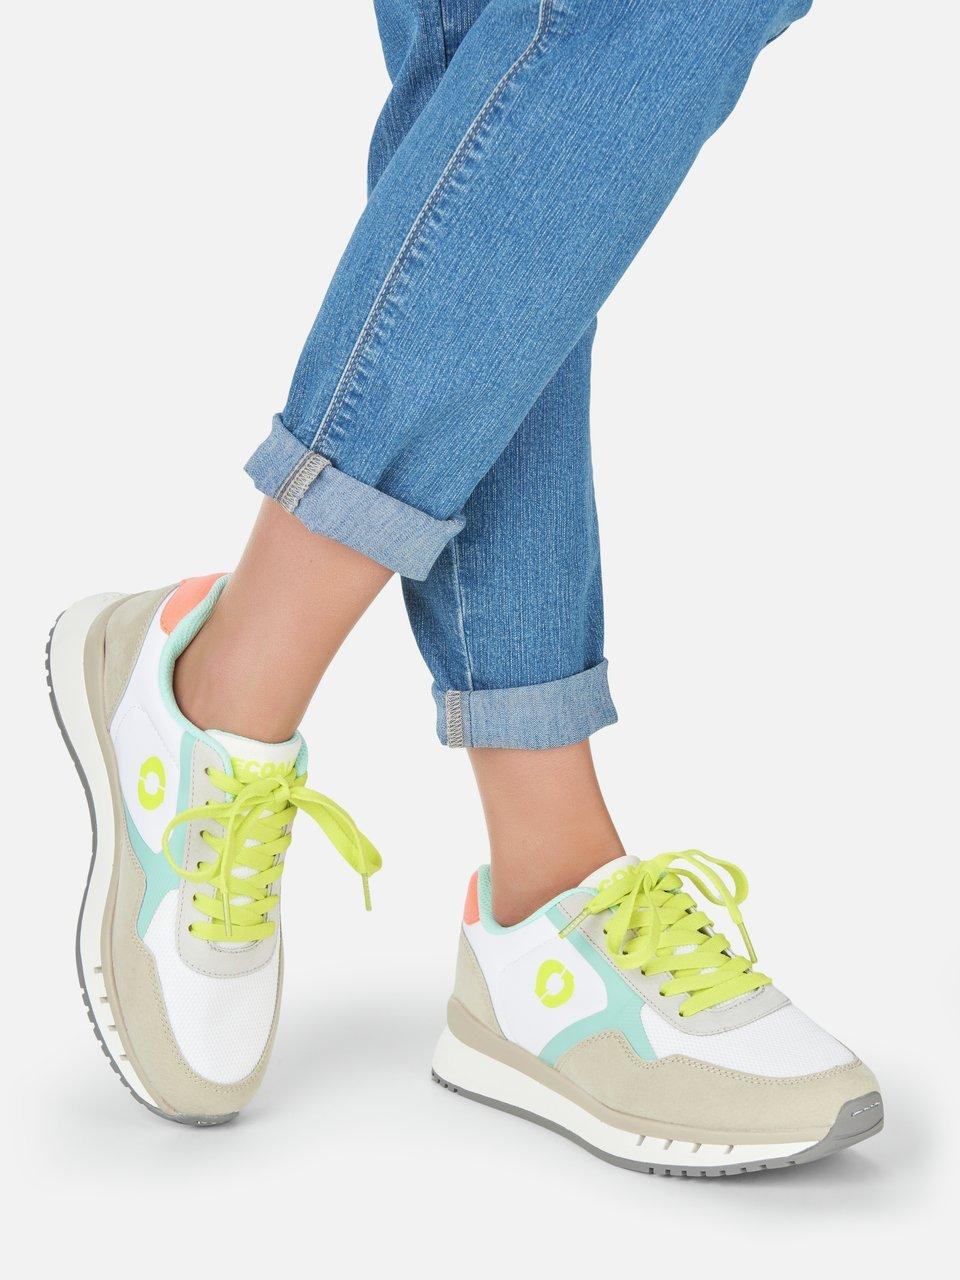 regering mini paspoort Ecoalf - Sneakers - wit/turquoise